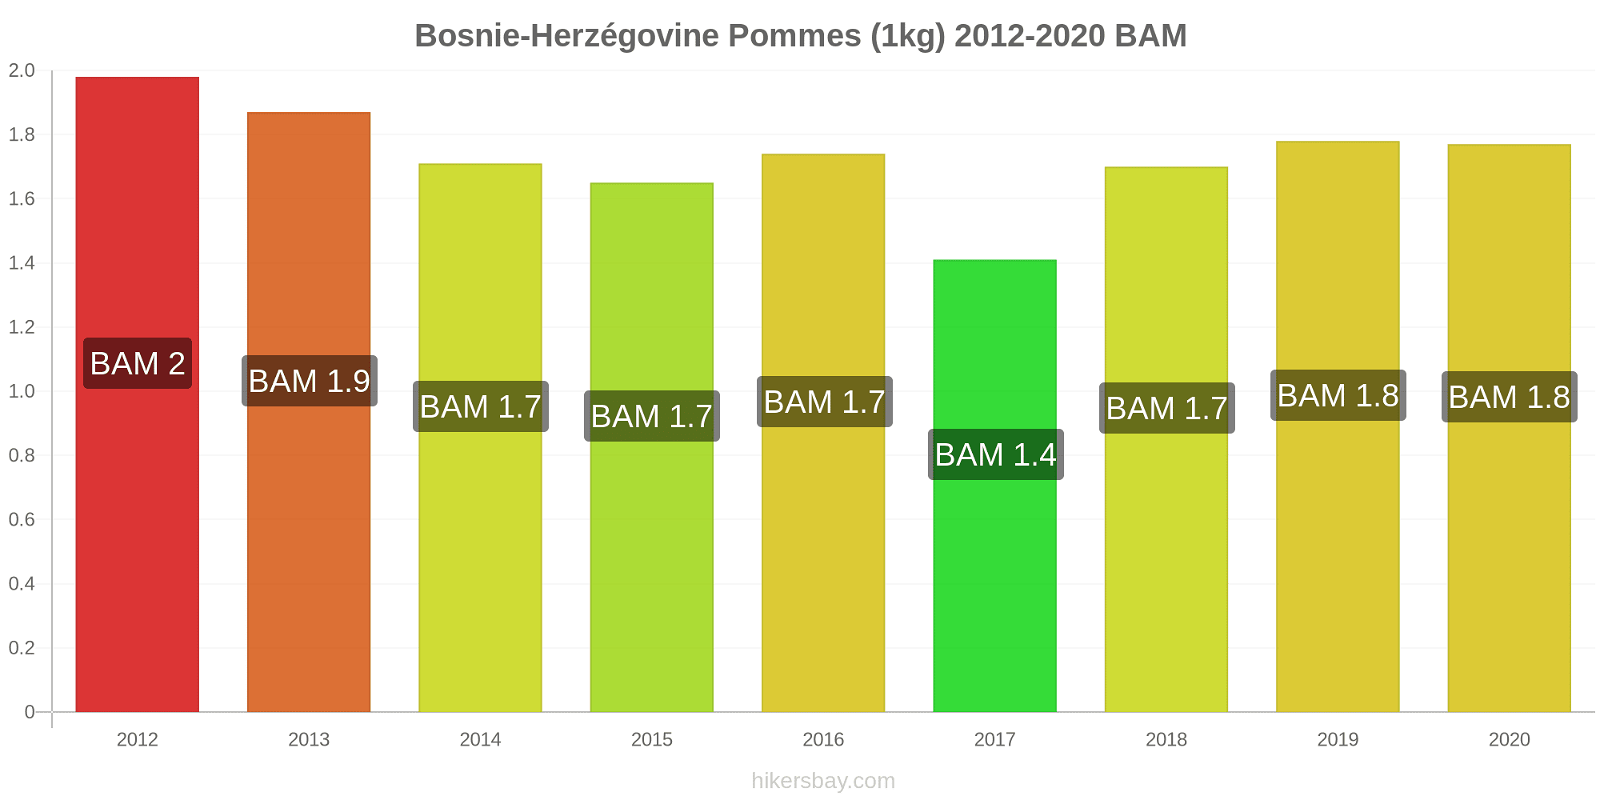 Bosnie-Herzégovine changements de prix Pommes (1kg) hikersbay.com